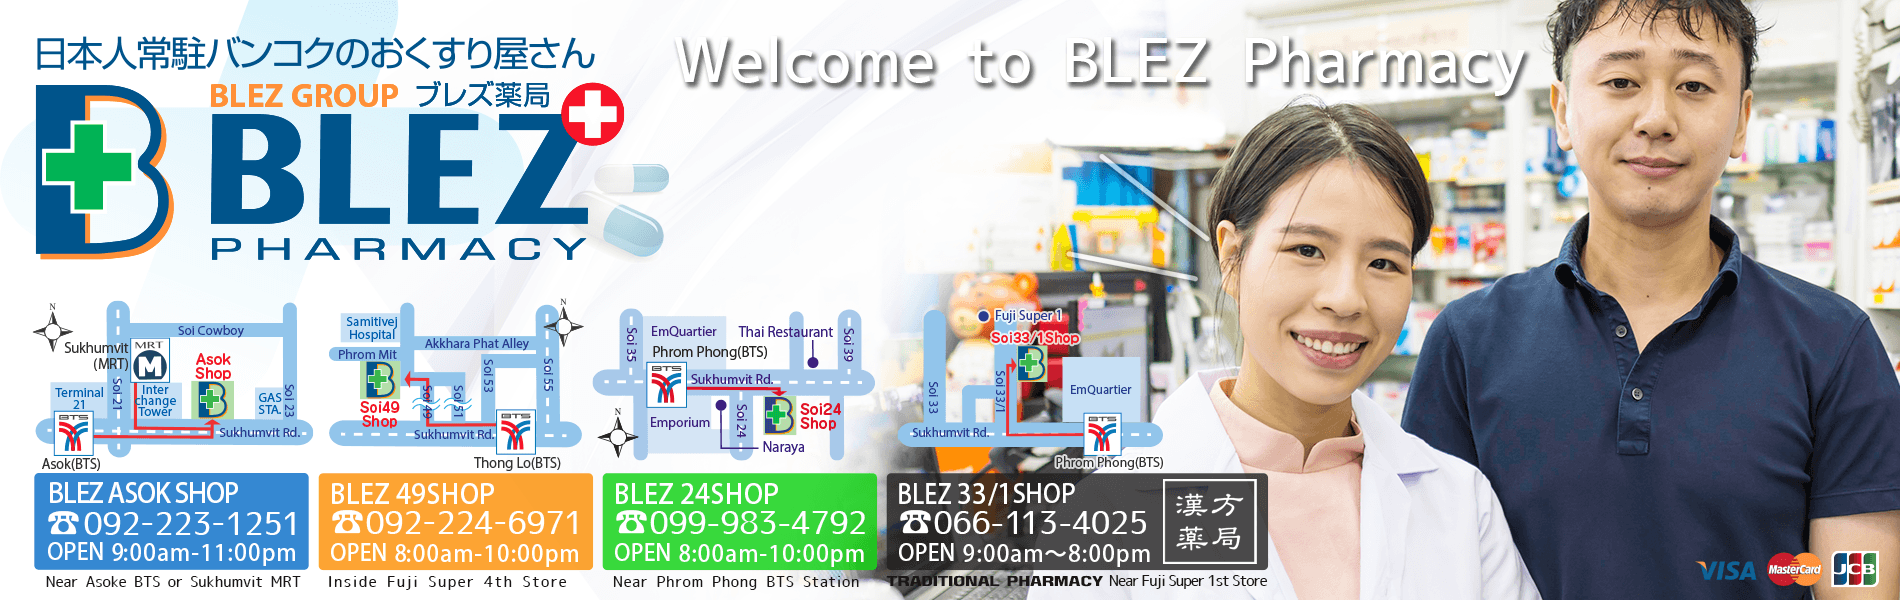 Welcome to BLEZ Pharmacy in Bangkok